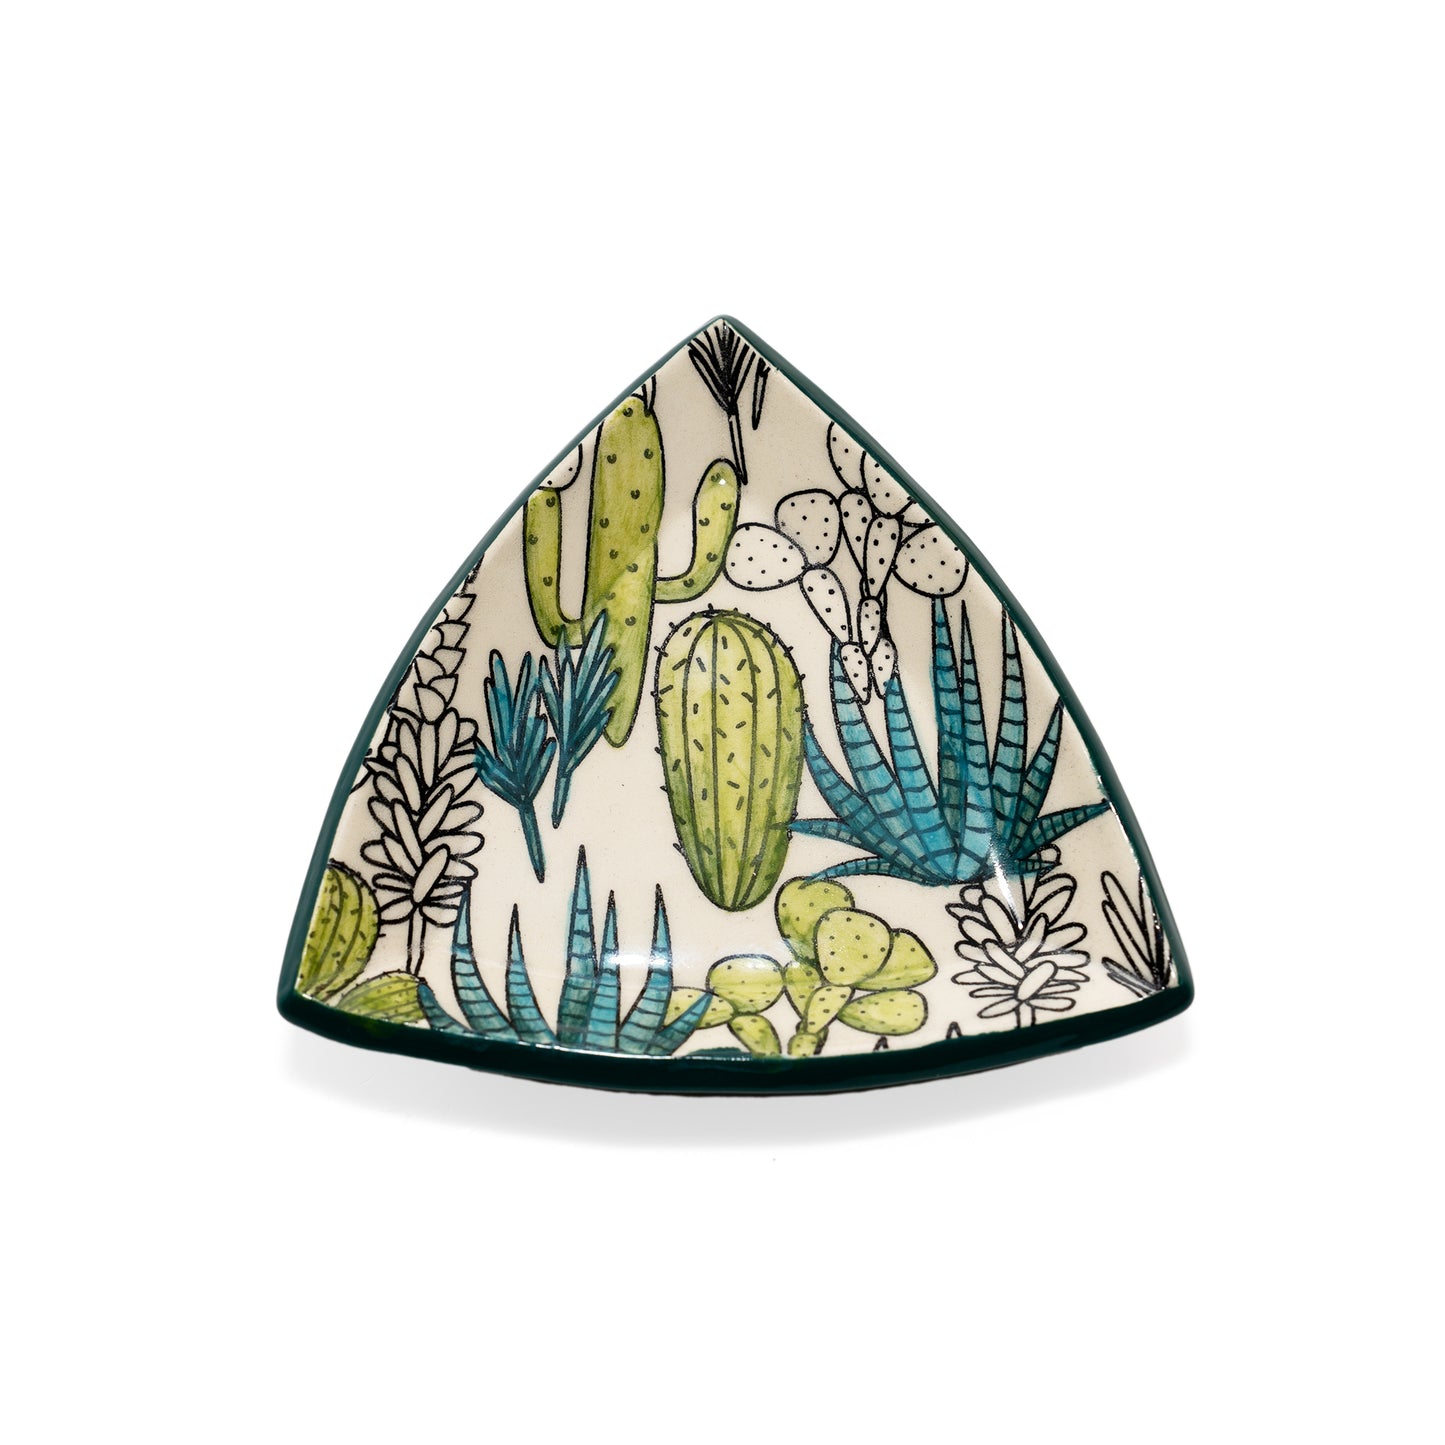 Ceramic Desert Patterned Triangular Dish